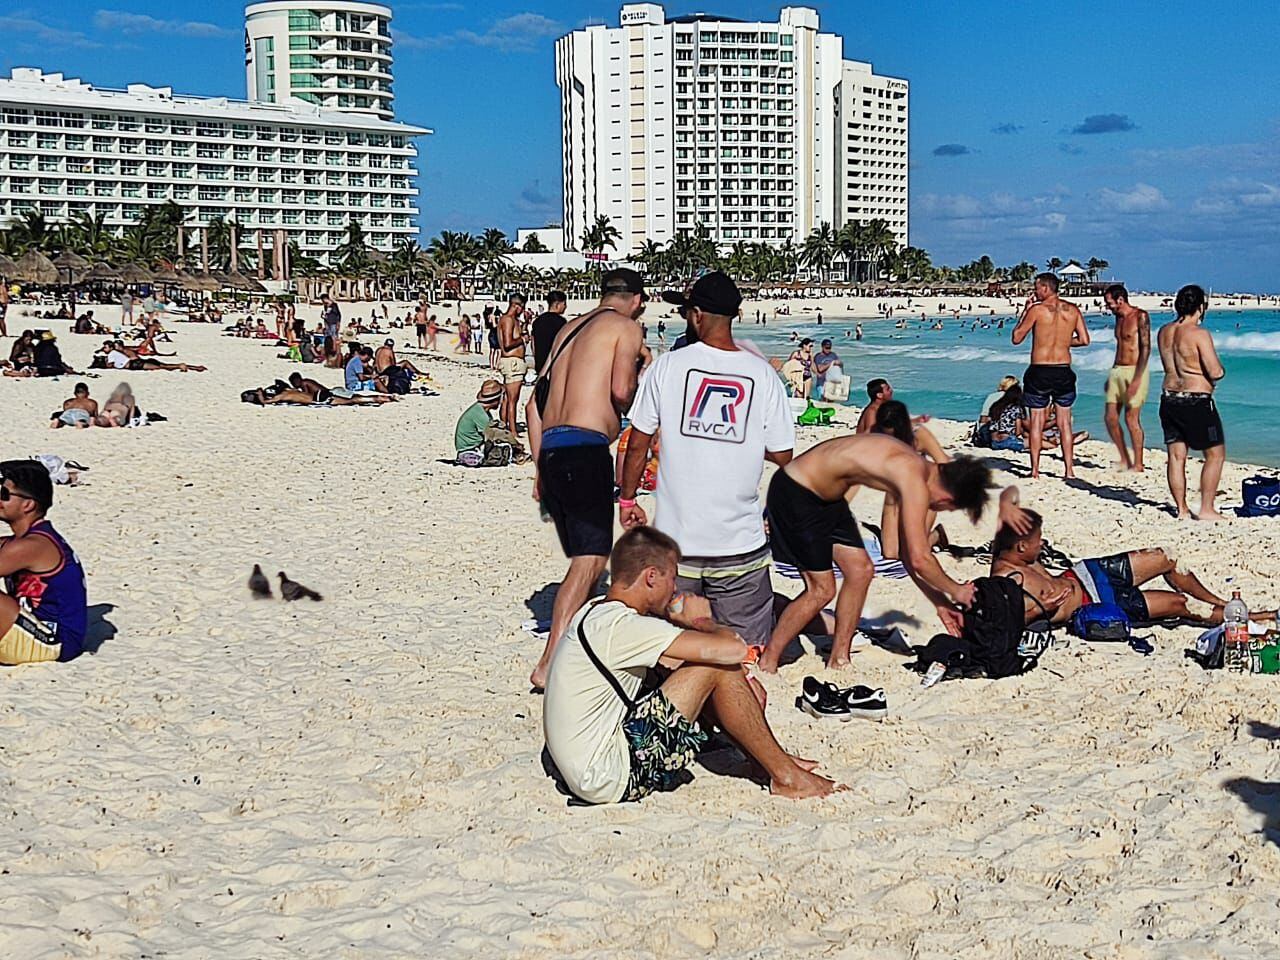 Turistas en Cancún, Quintana Roo durante Semana Santa. Imagen de Renan Quintal. 